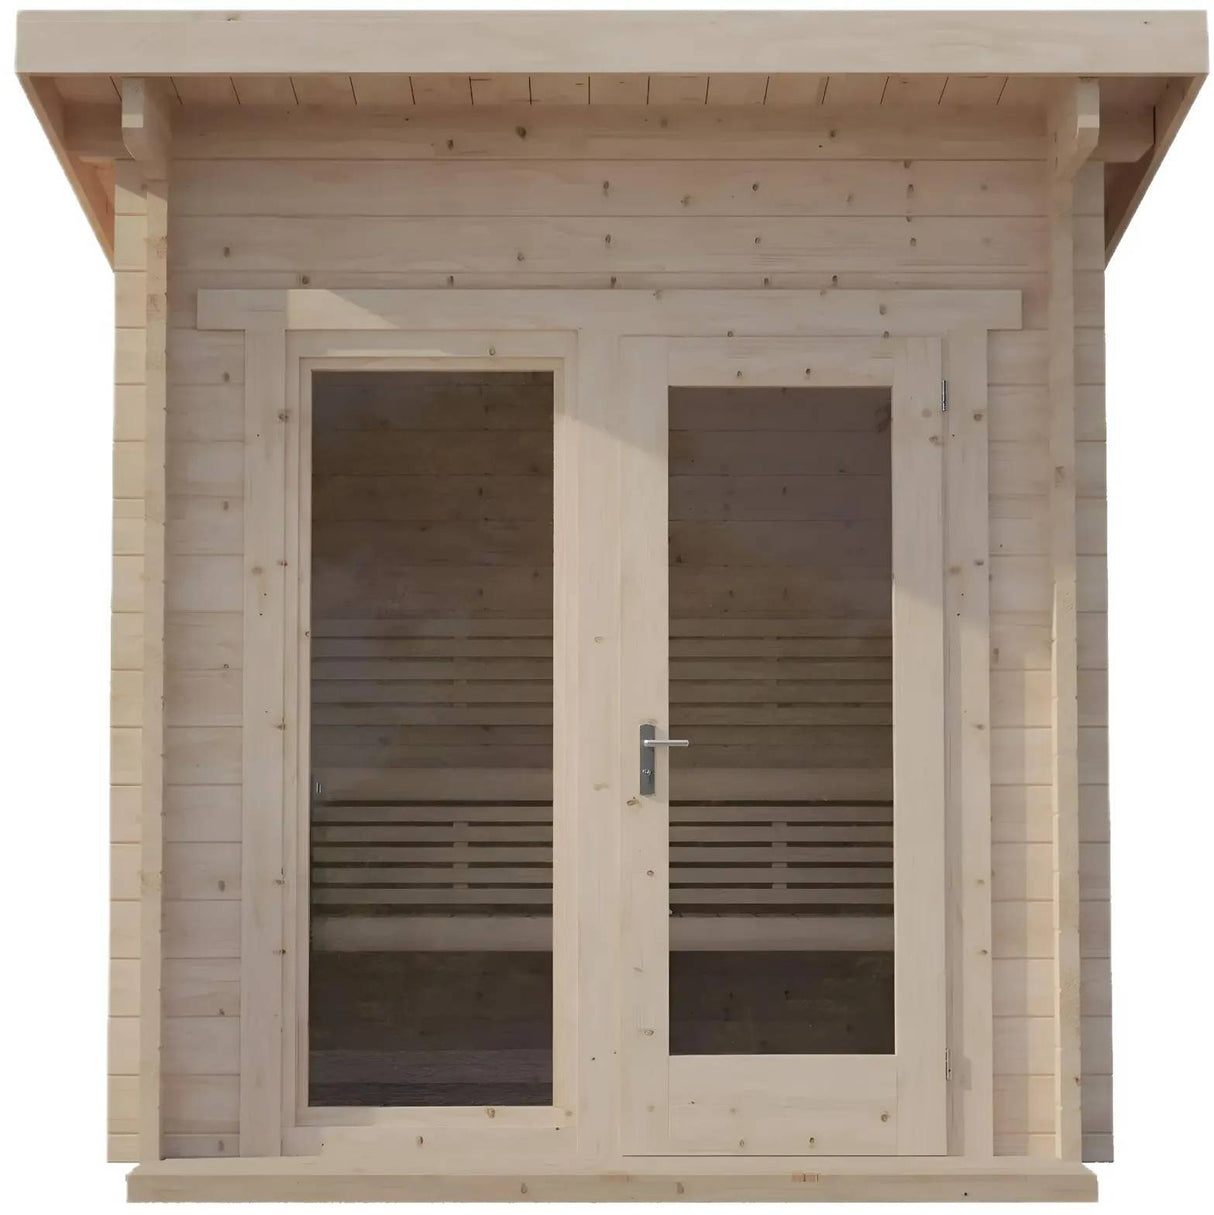 ZiahCare's SaunaLife Model G4 Outdoor Home Sauna Kit Mockup Image 1